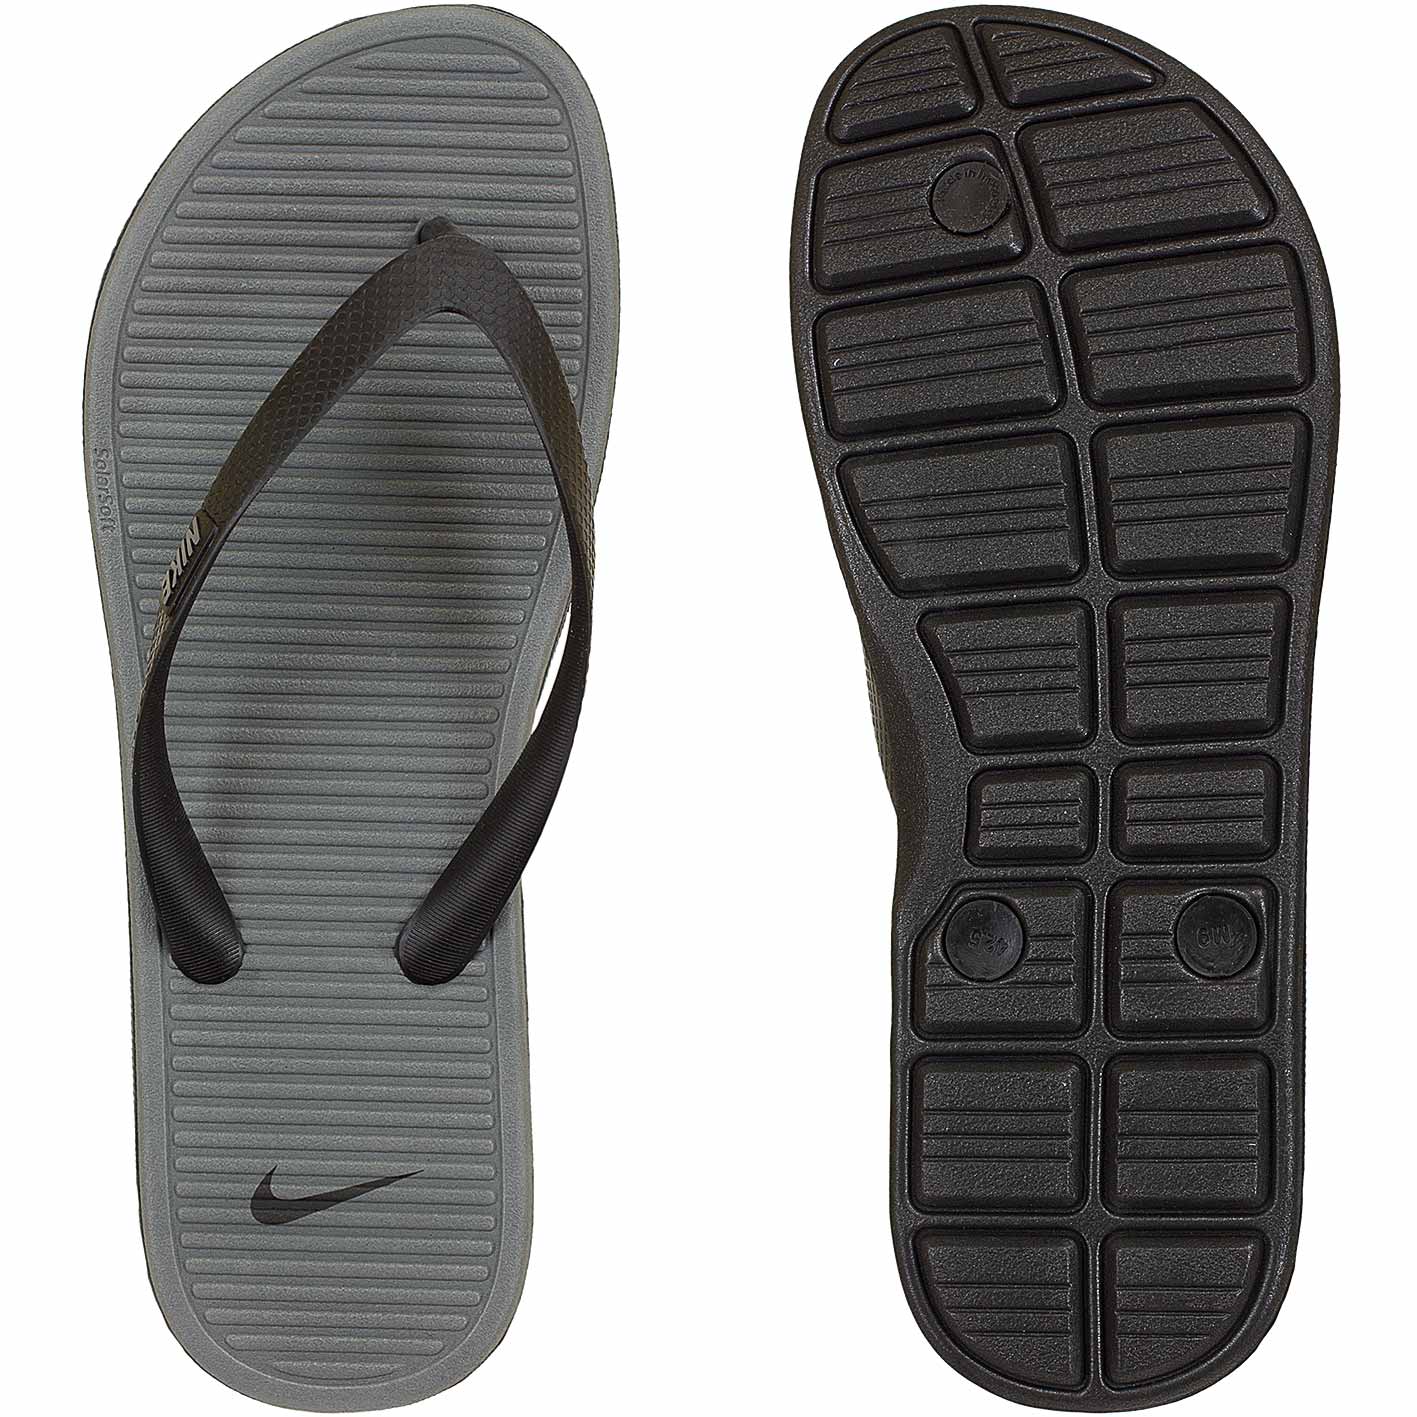 ☆ Nike Flop 2 schwarz/grau - hier bestellen!